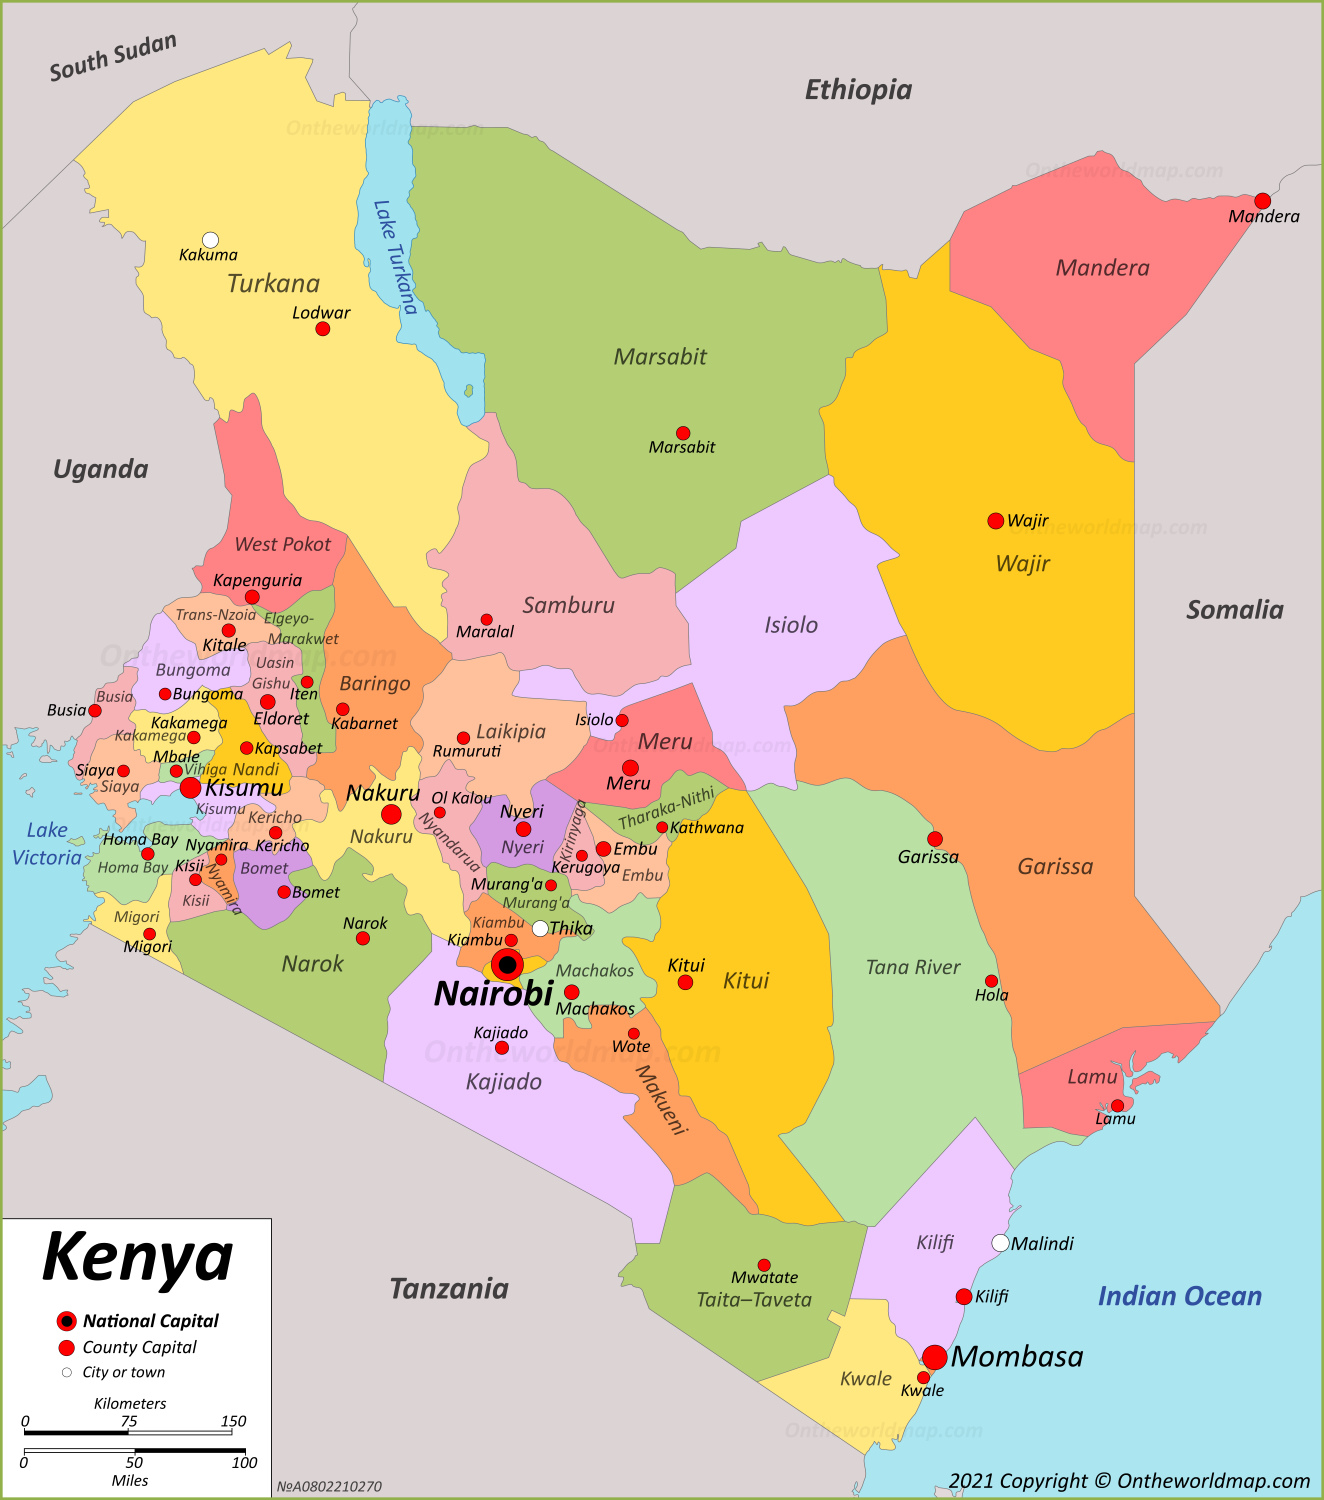 Kenya’s former 8 provinces & current 290 constituencies, 47 counties